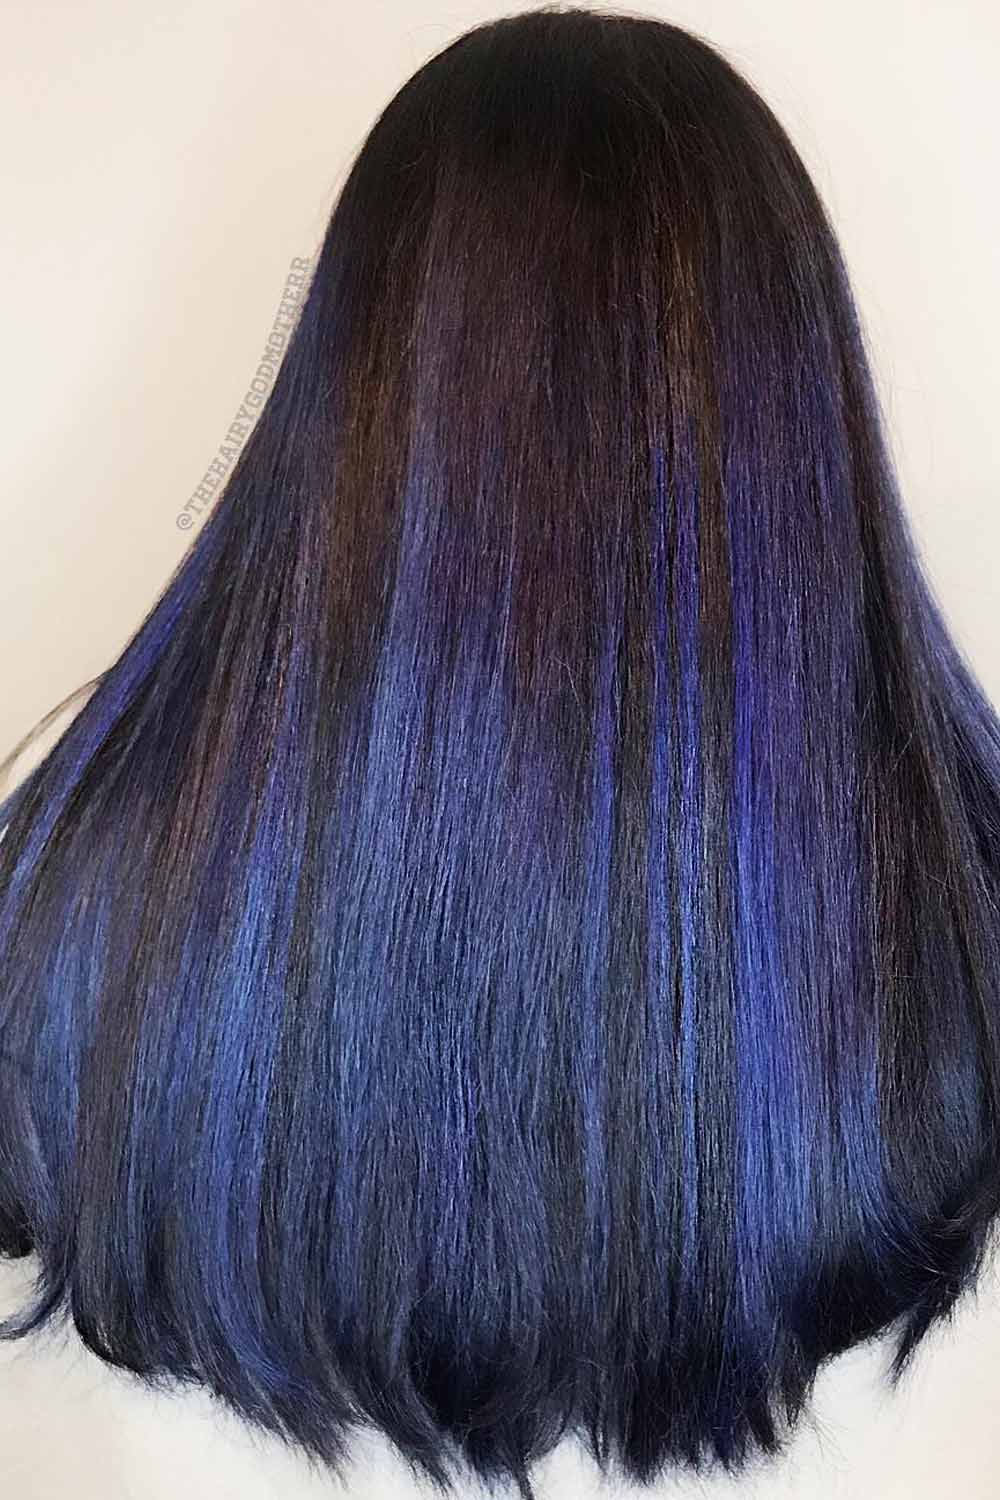 Black Hair With Blue Highlights #blackhairwithhighlights #hairwithhighlights #blue